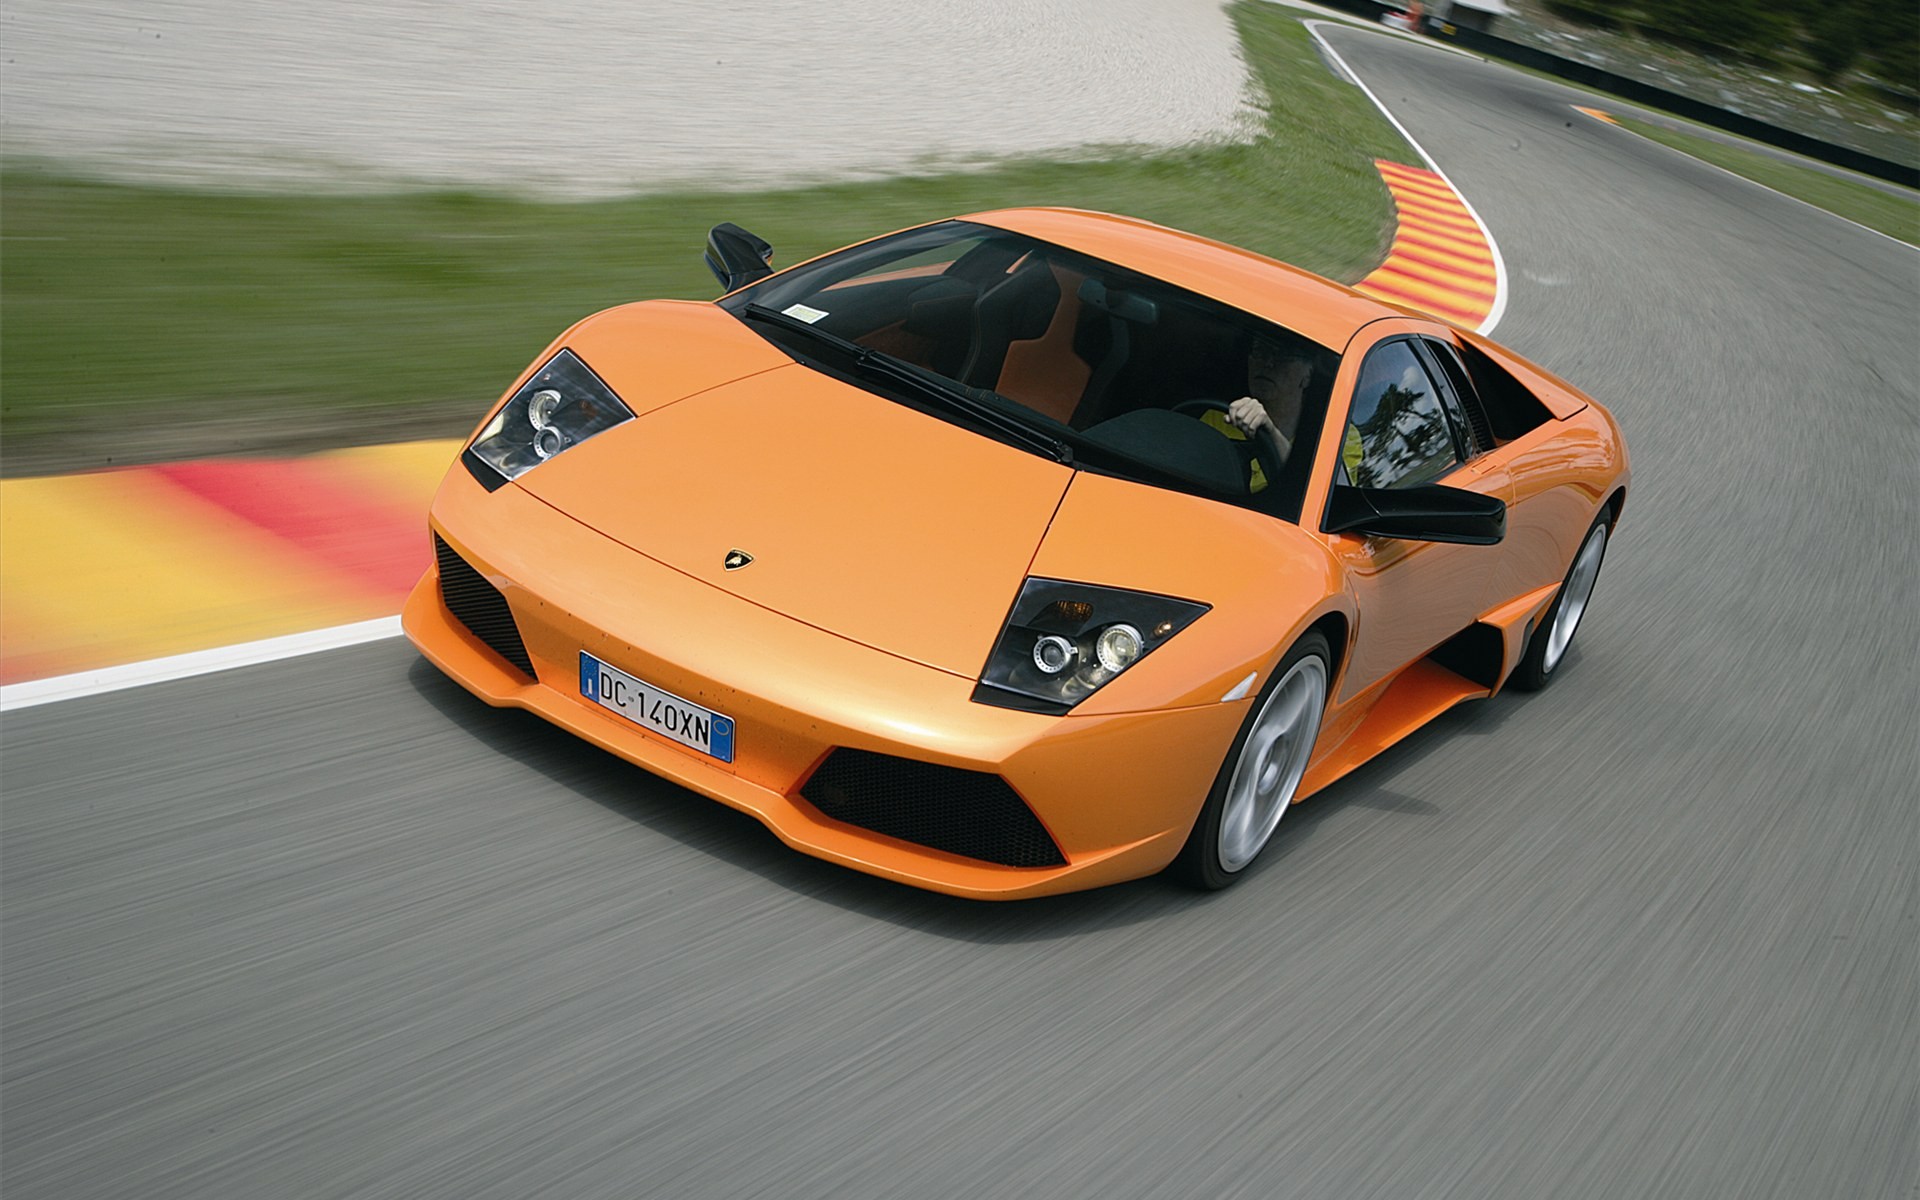 General 1920x1200 car orange cars motion blur Lamborghini vehicle racing supercars